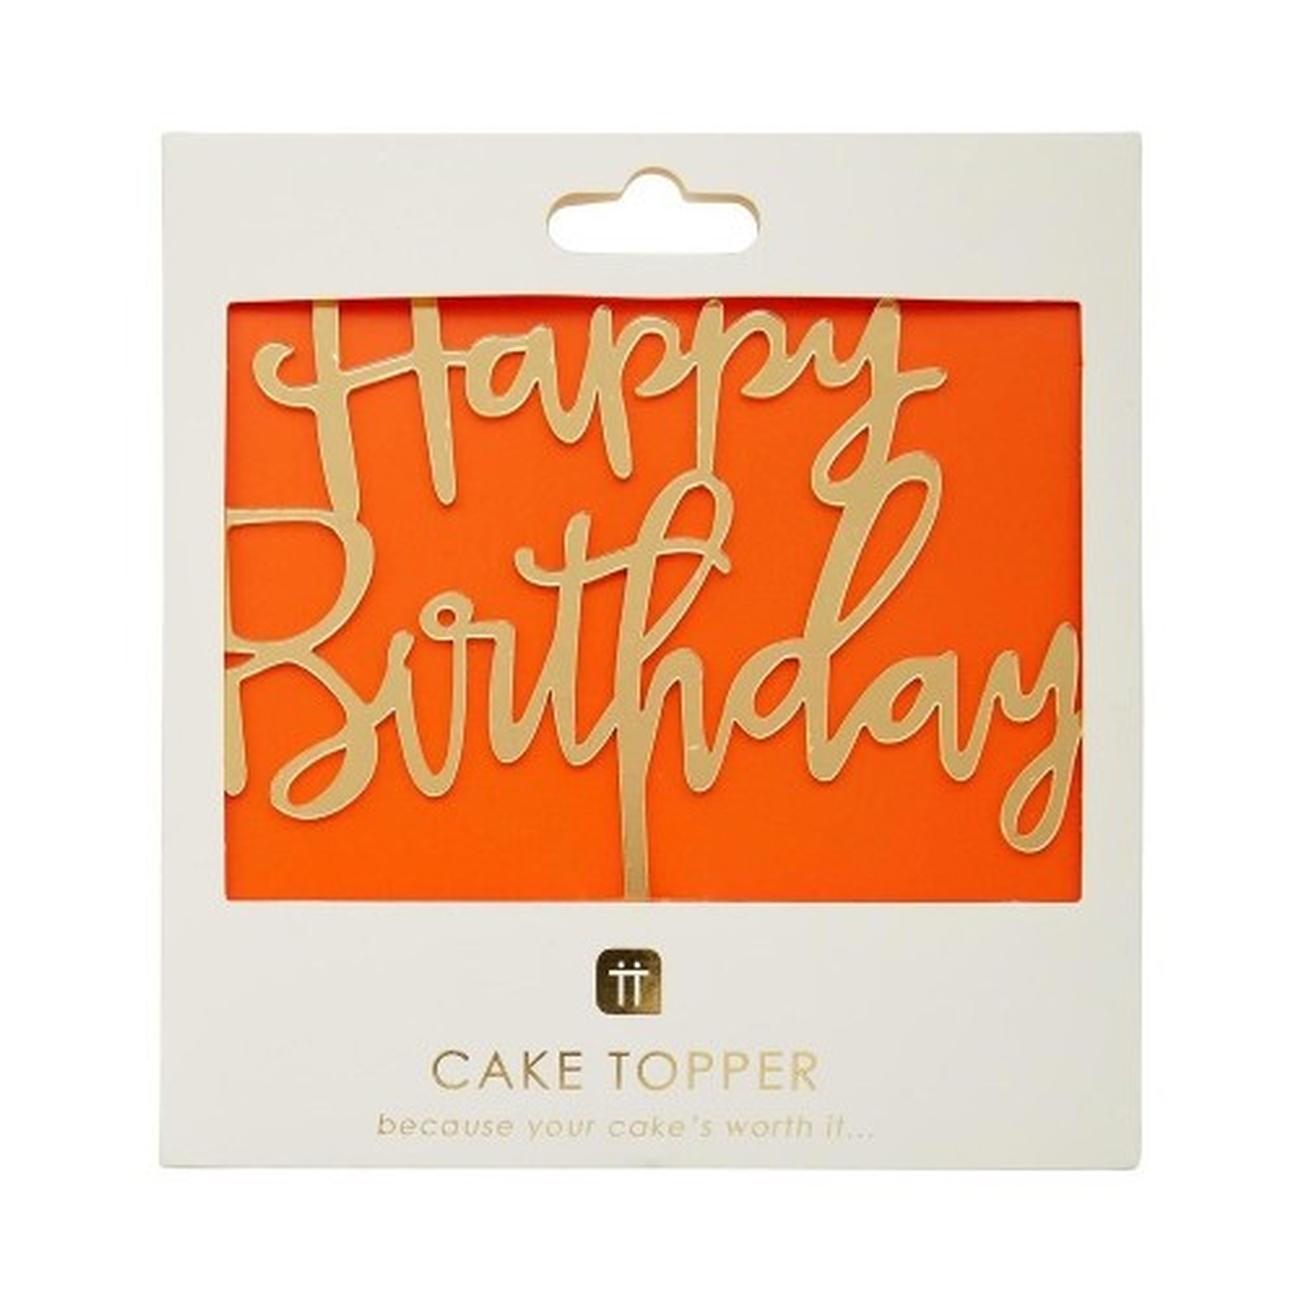 tt-luxe-happy-birthday-acr-cake-topper - TT Luxe Gold Happy Birthday Cake Topper